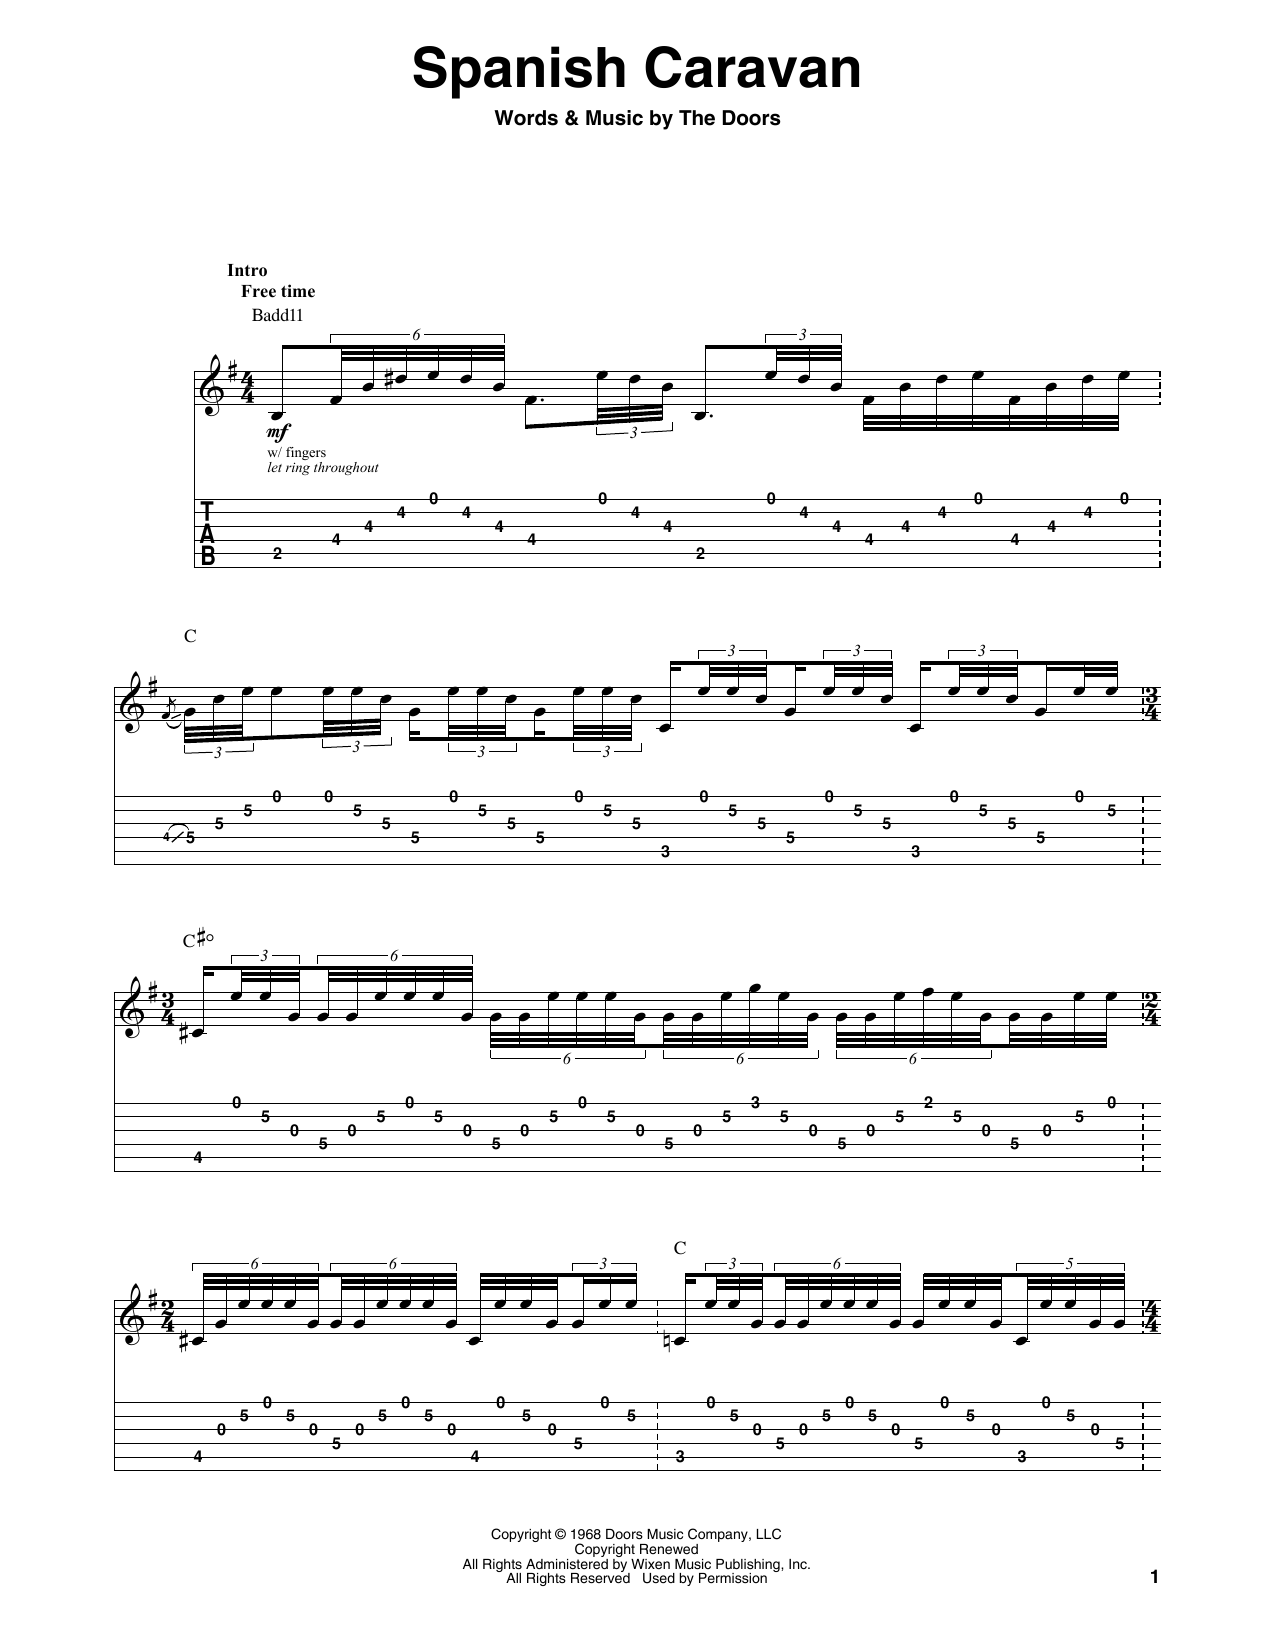 The Doors Spanish Caravan Sheet Music Notes & Chords for Guitar Chords/Lyrics - Download or Print PDF